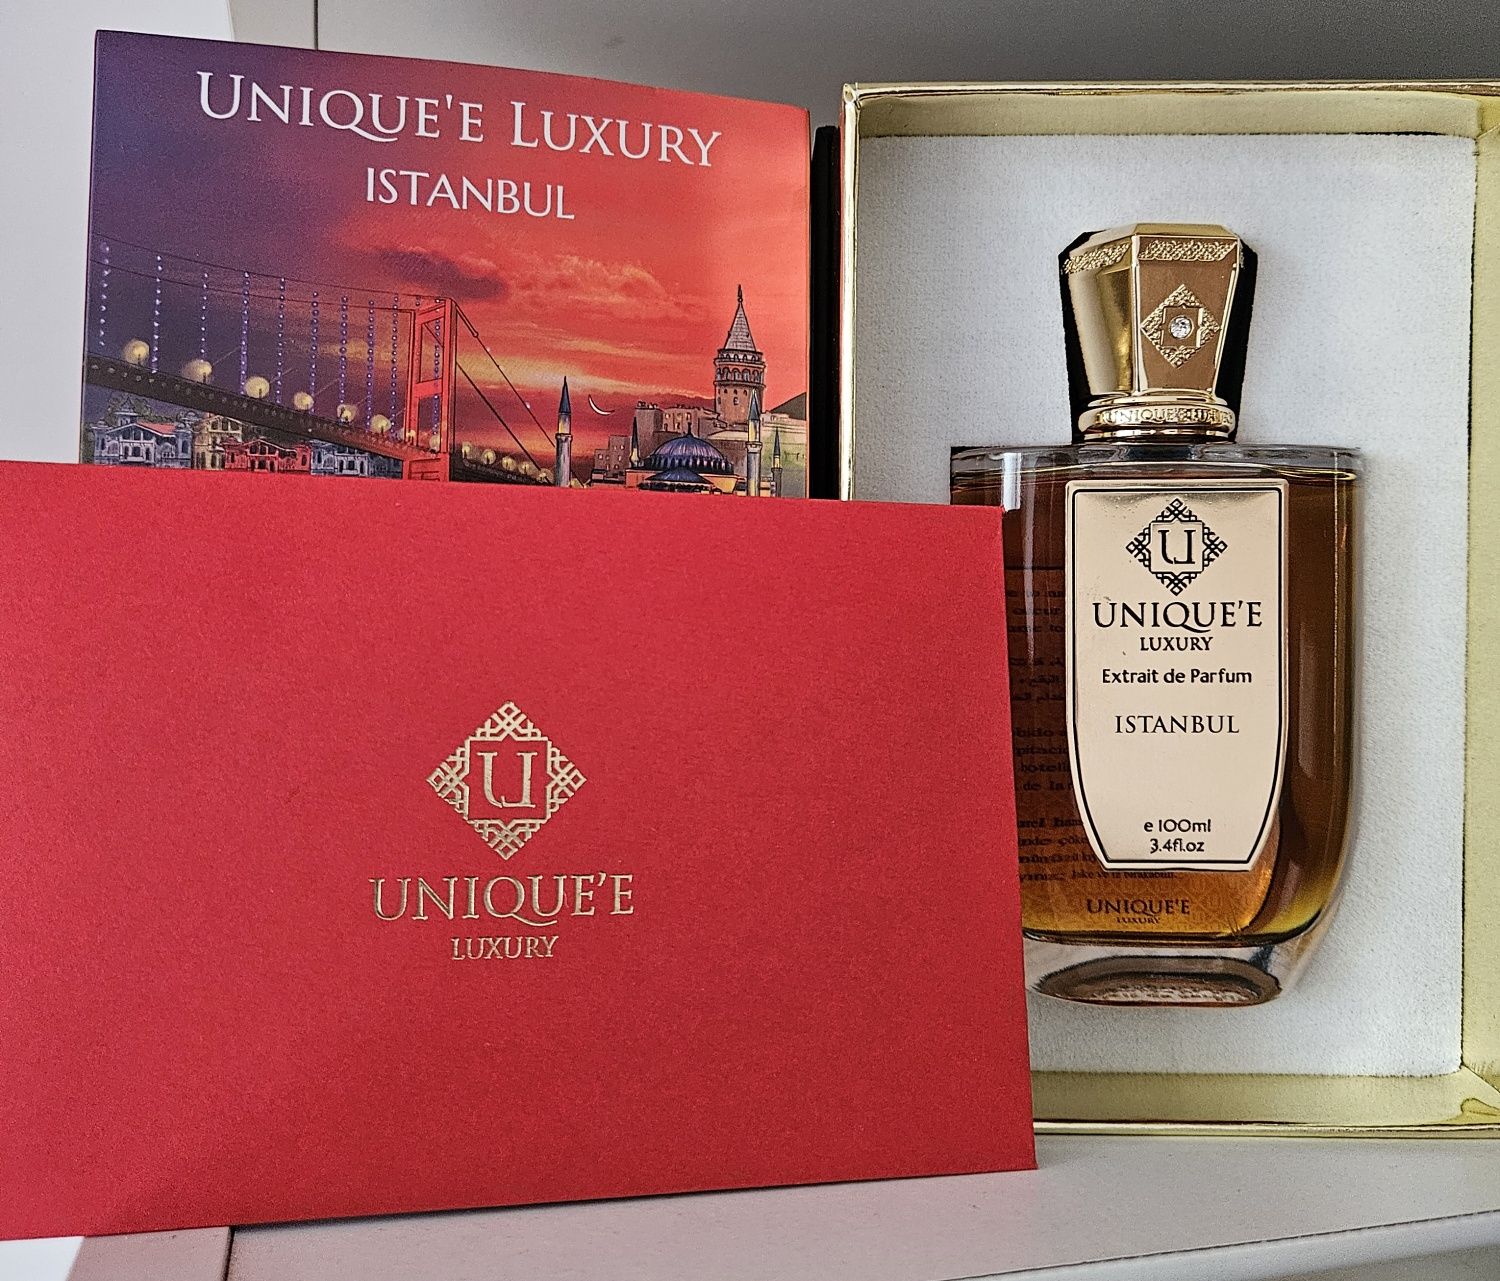 Unique'e Luxury Istanbul